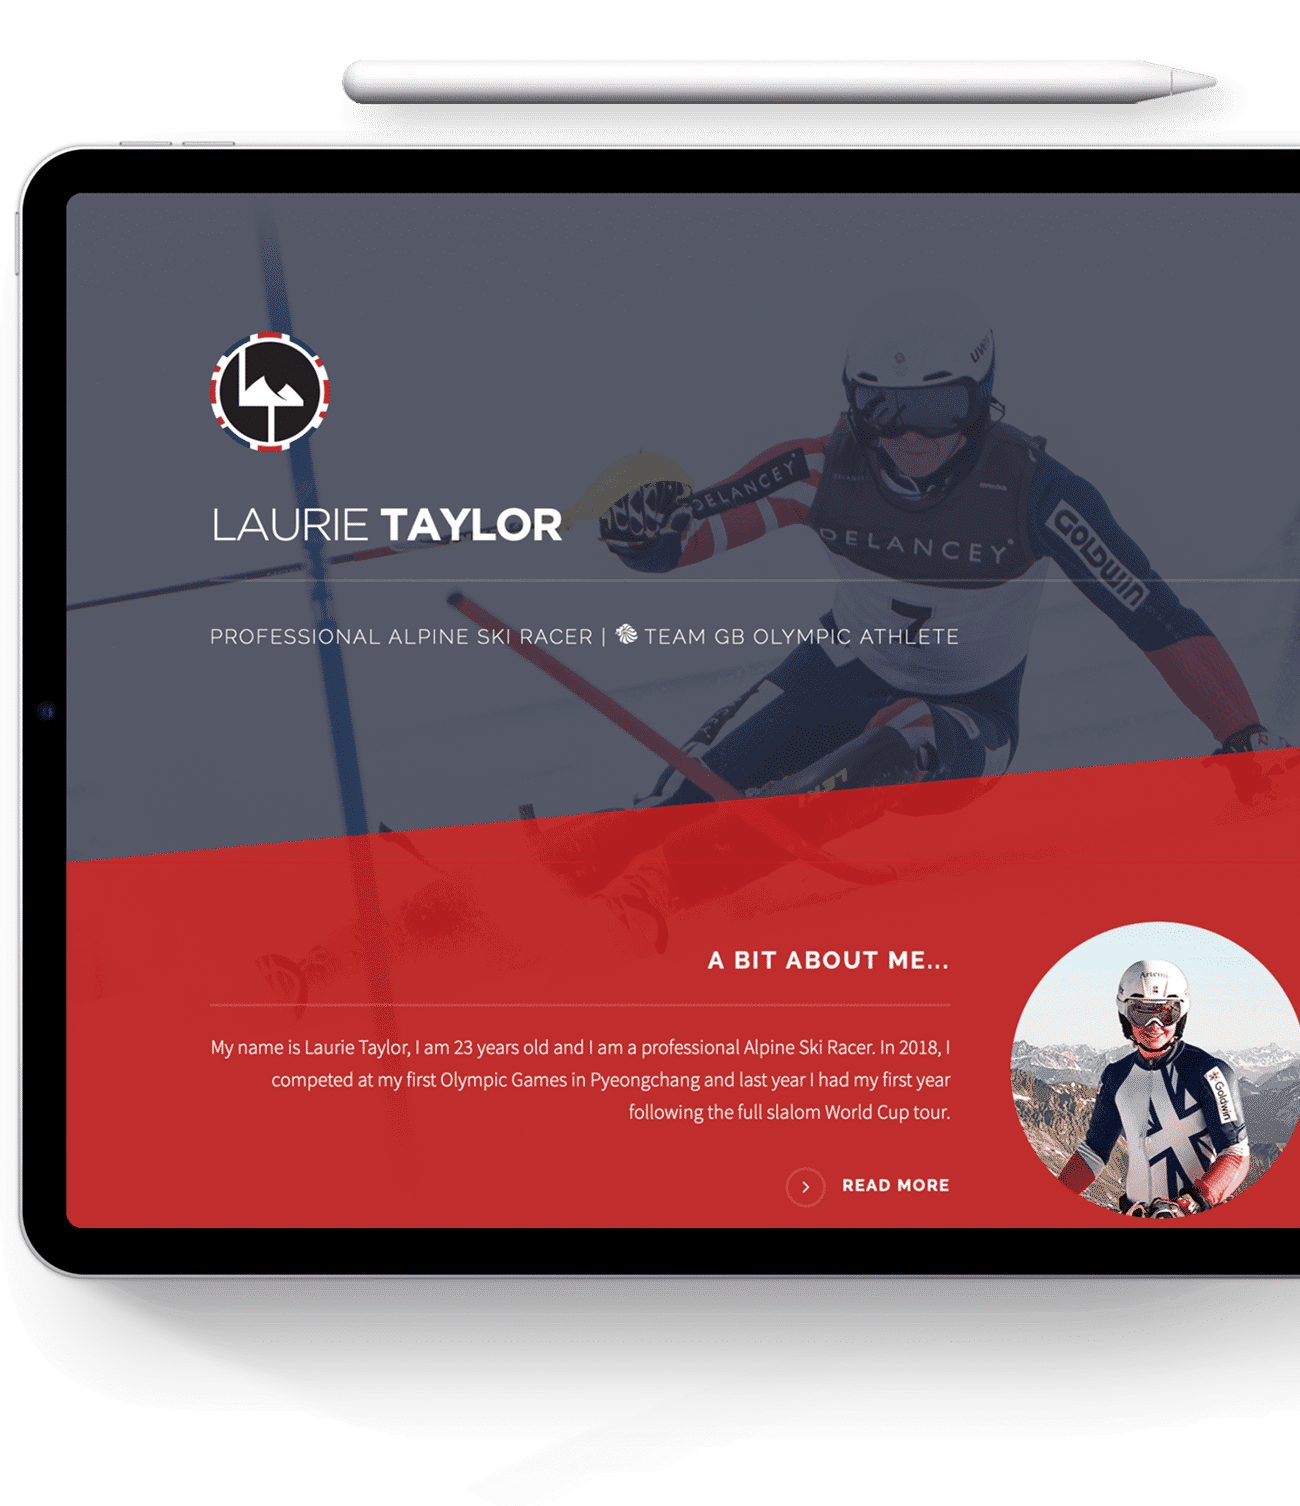 Laurie Taylor Website Design